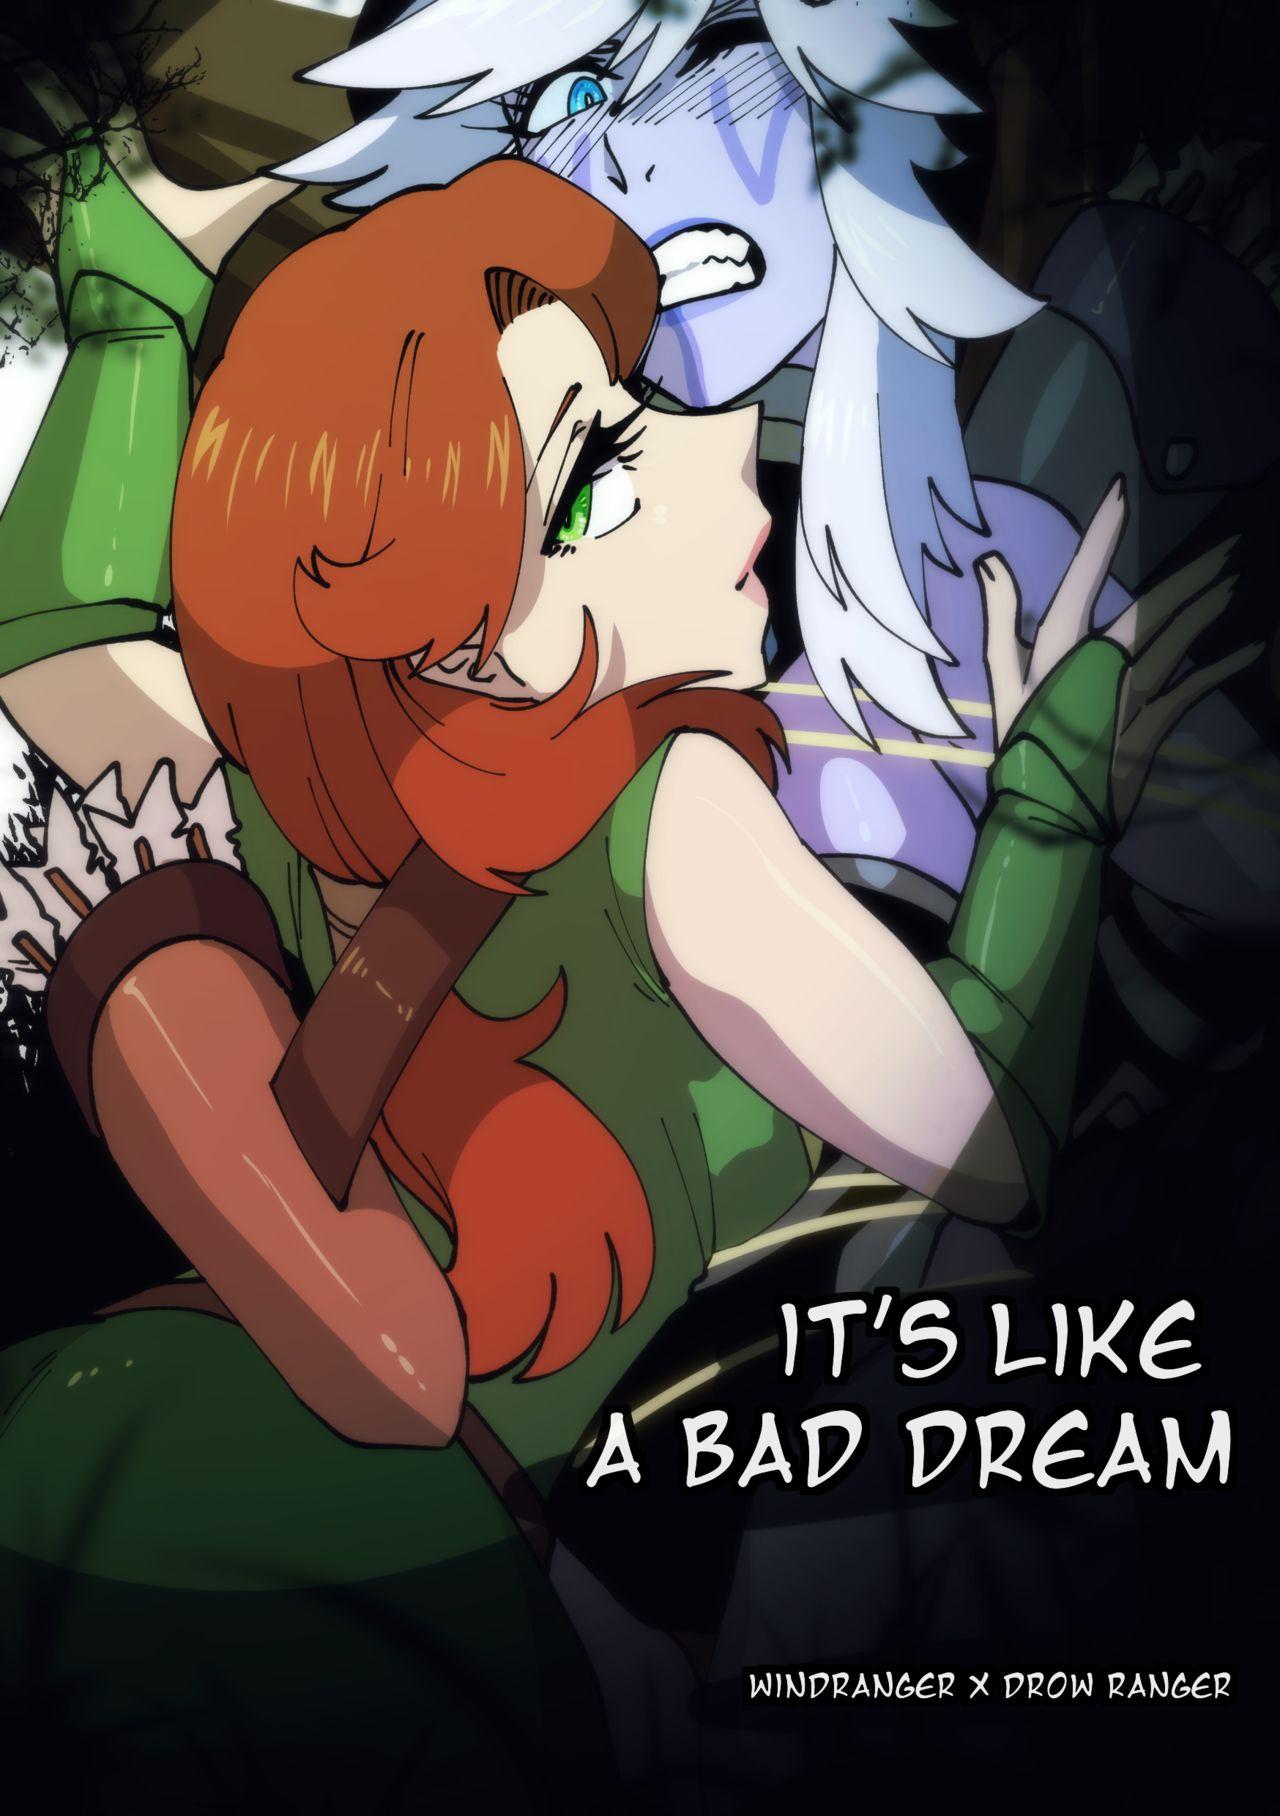 "It's Like A Bad Dream" Windranger x Drow Ranger comic by Riko 0